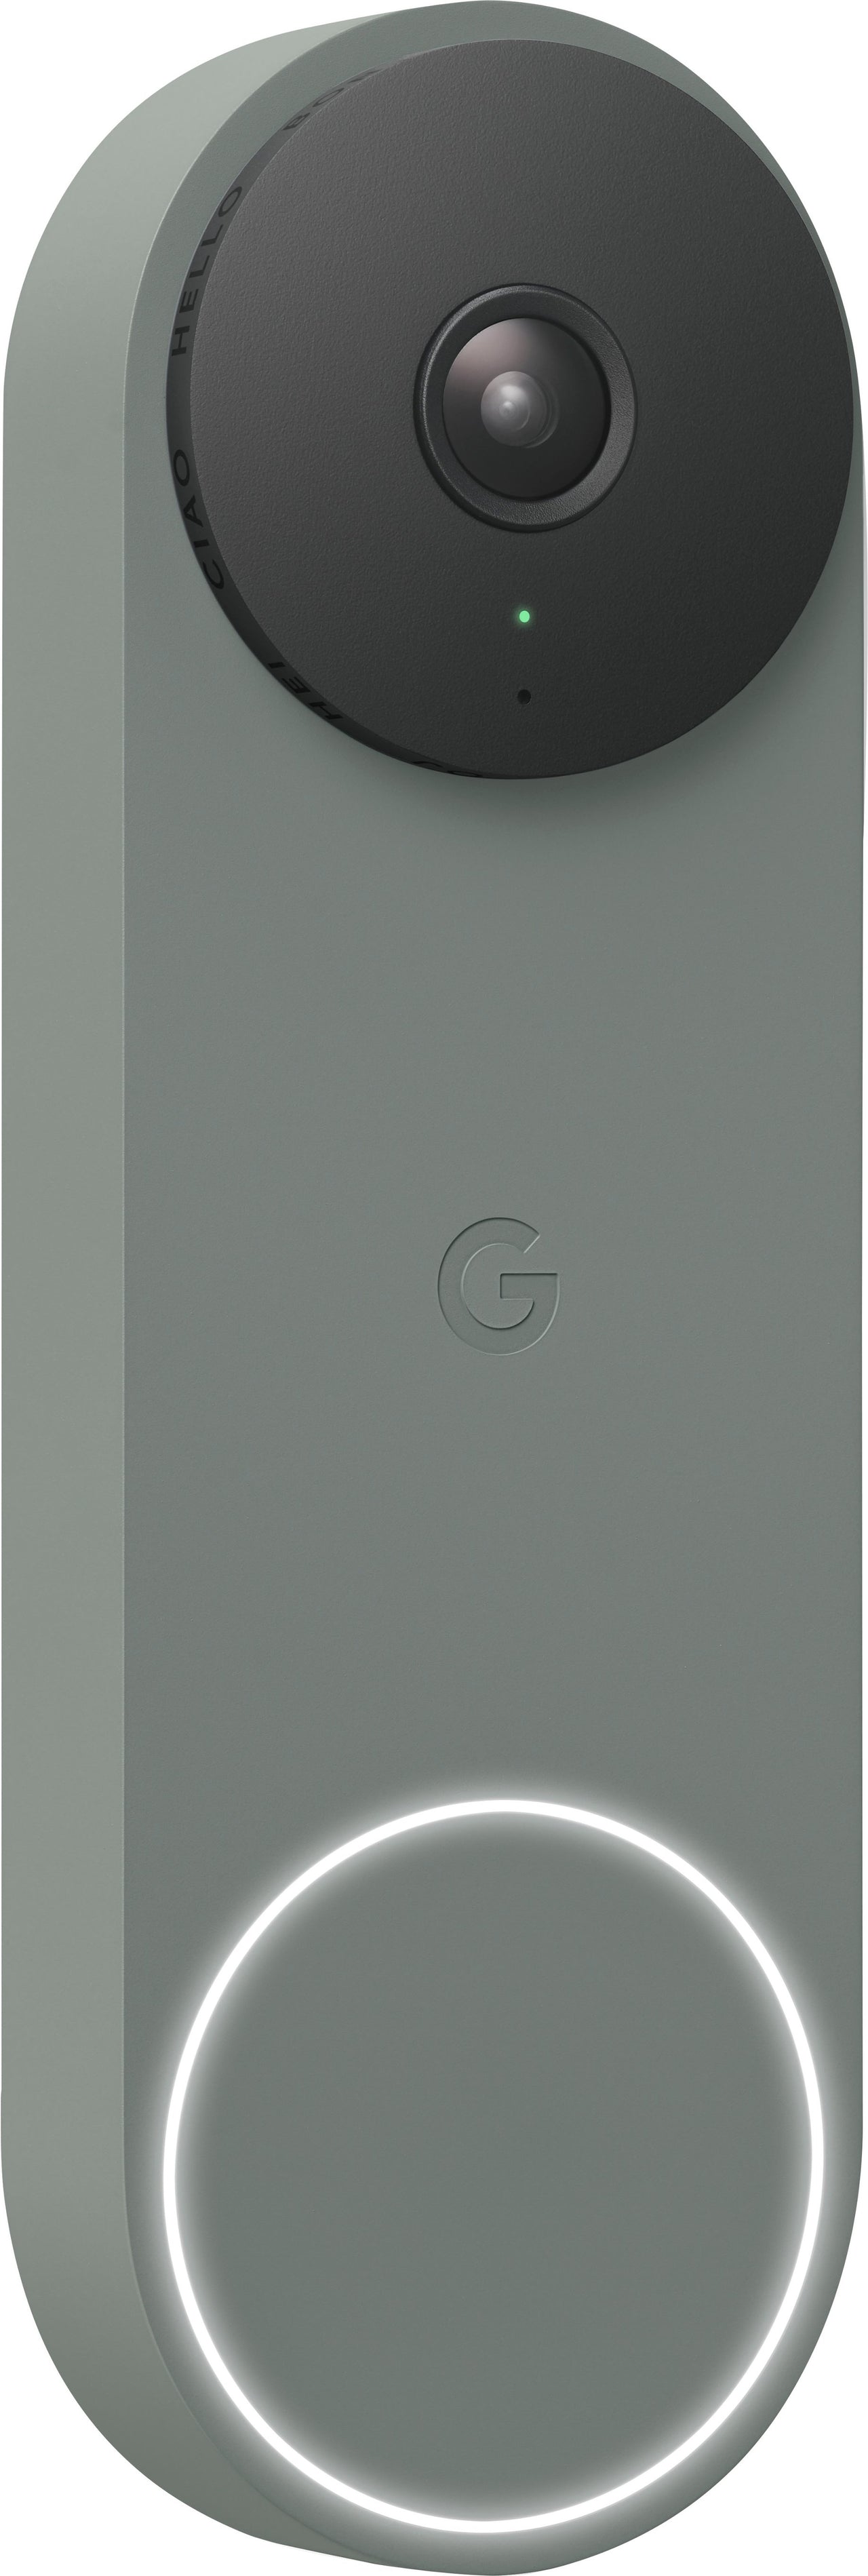 Google - Geek Squad Certified Refurbished Nest Doorbell Wired (2nd Generation) - Ivy